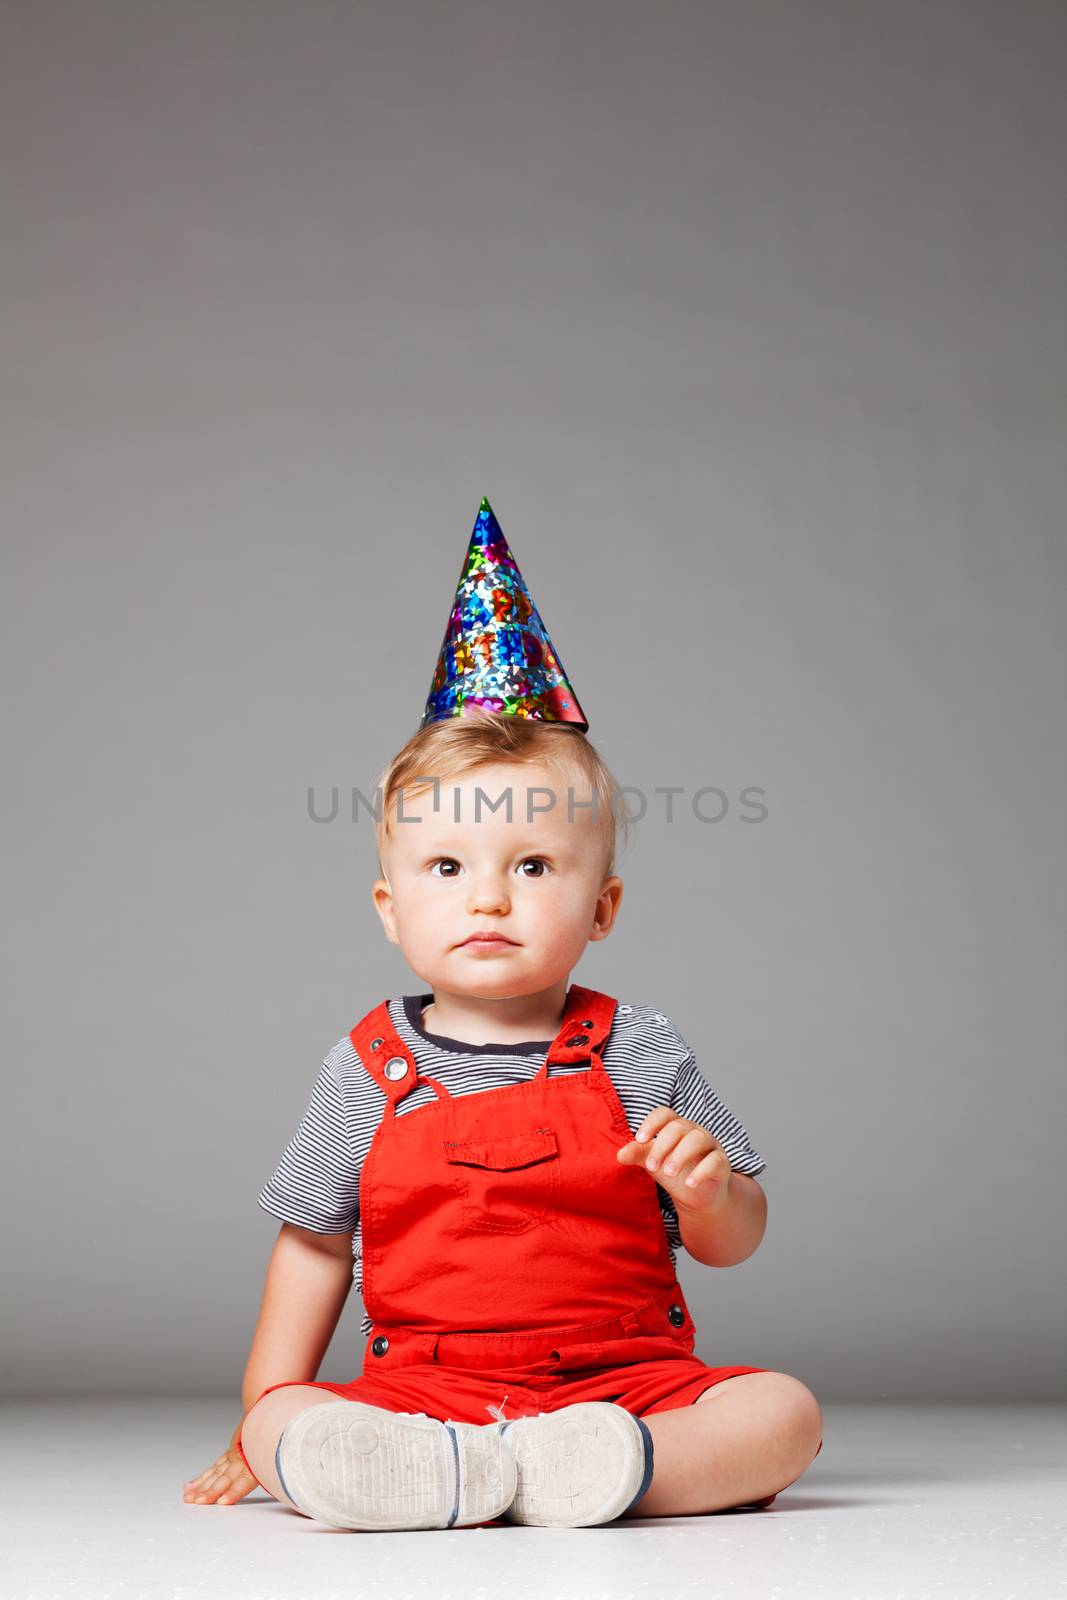 baby birthday boy with hat by kokimk